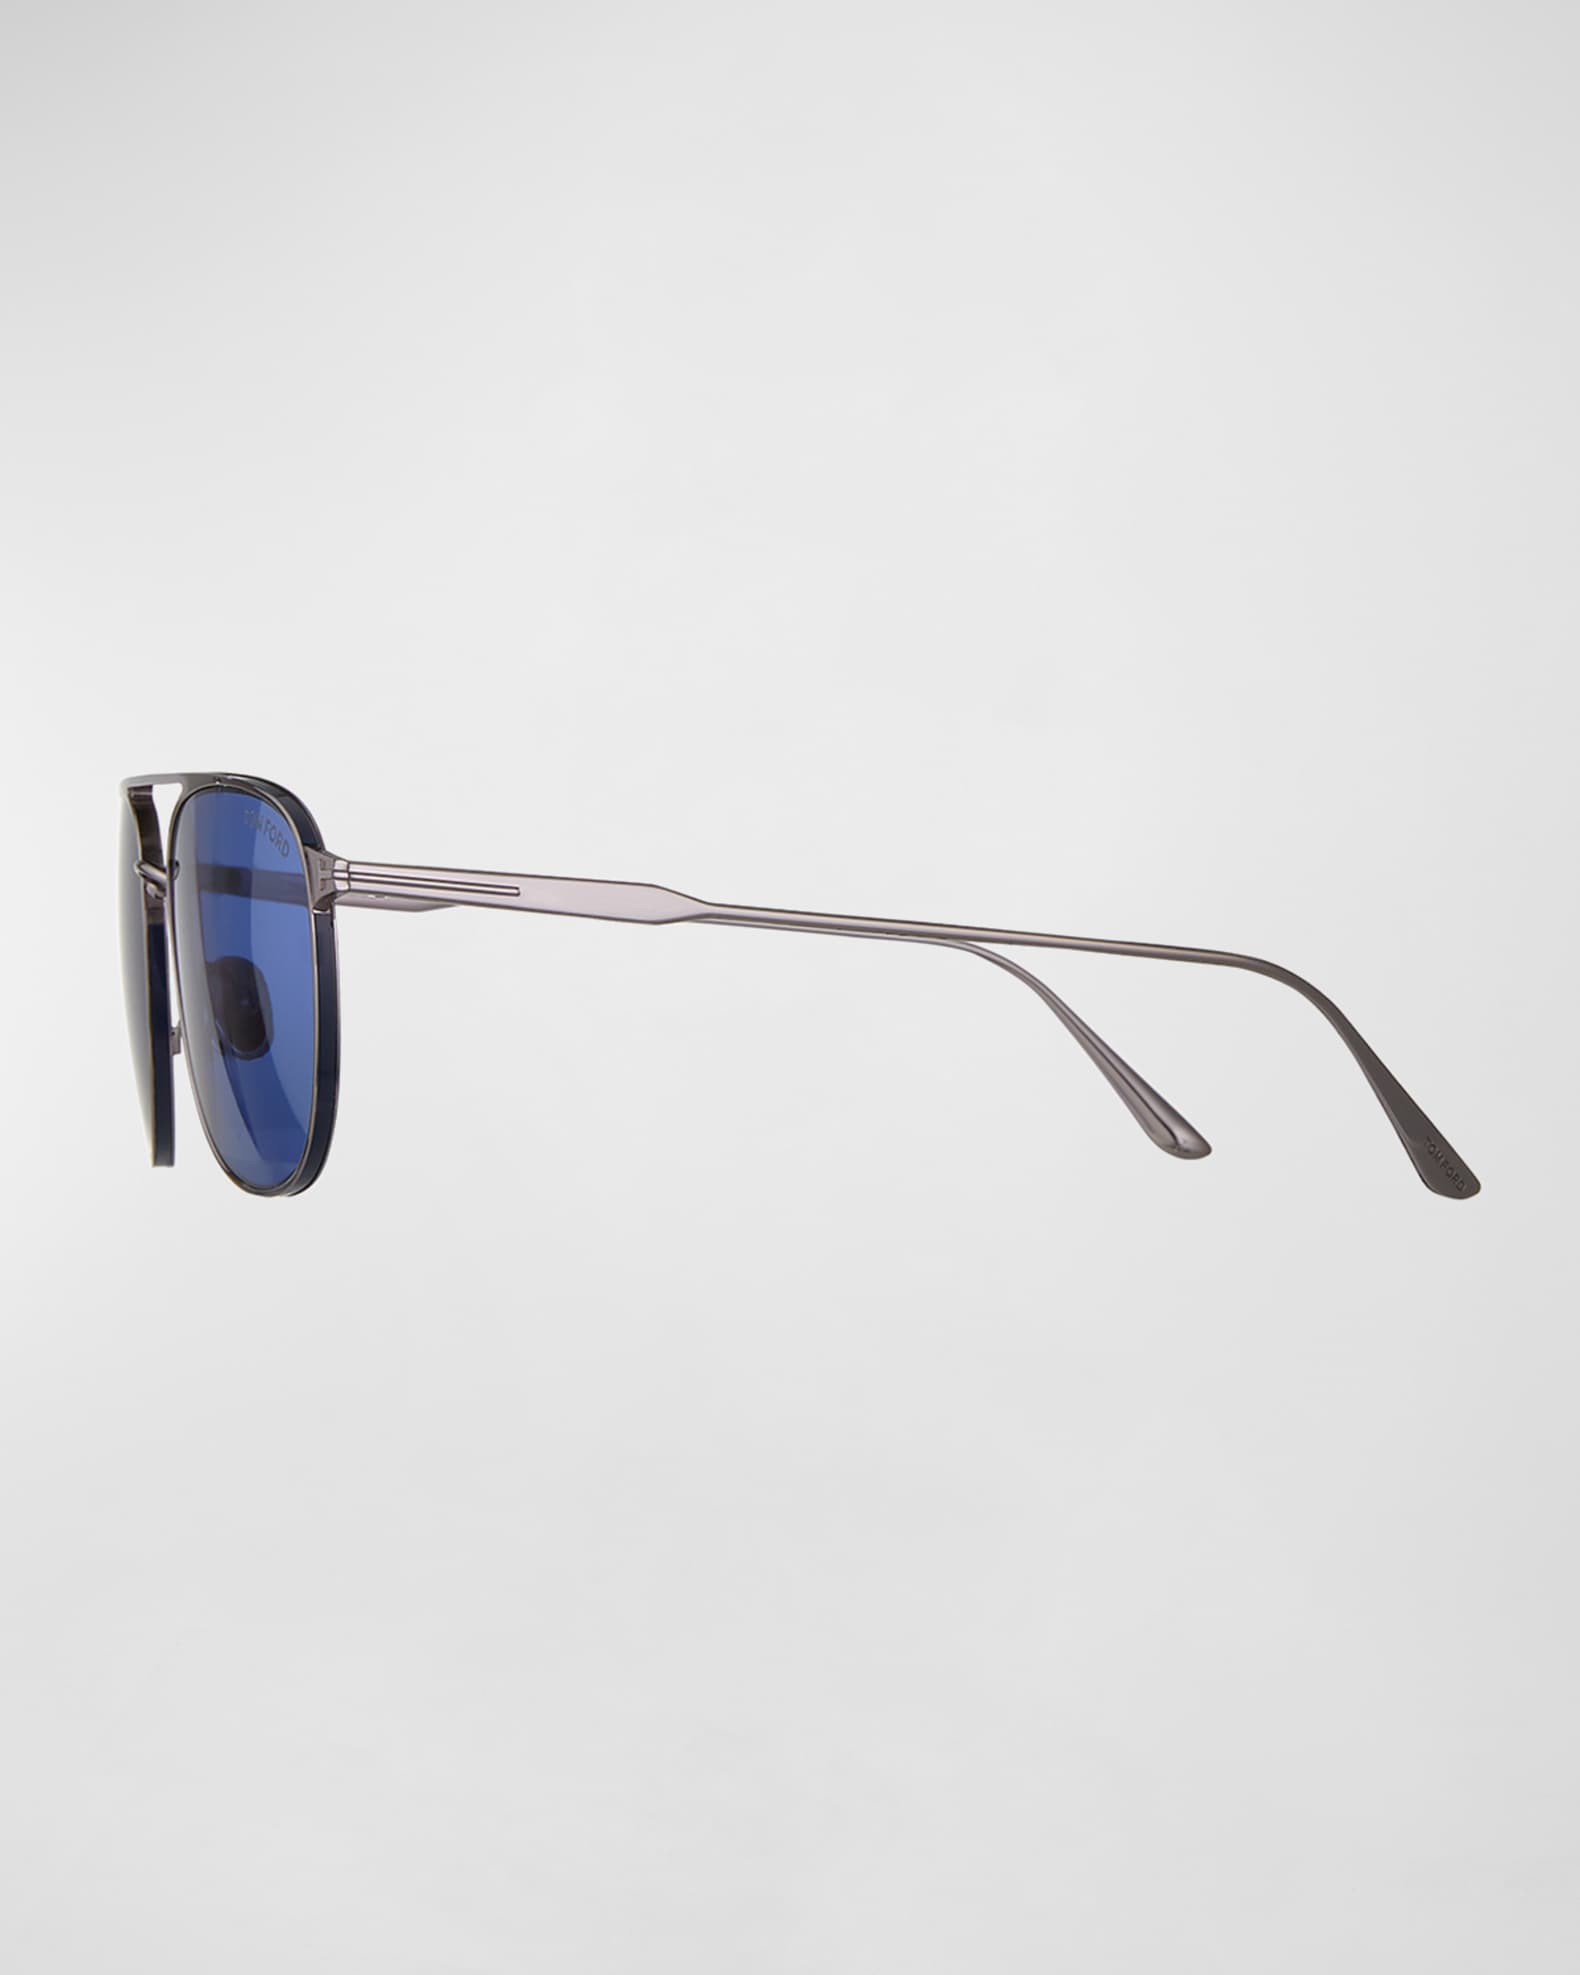 TOM FORD - Laurent D-Frame Acetate and Gunmetal-Tone Polarised Sunglasses -  Men - Black TOM FORD